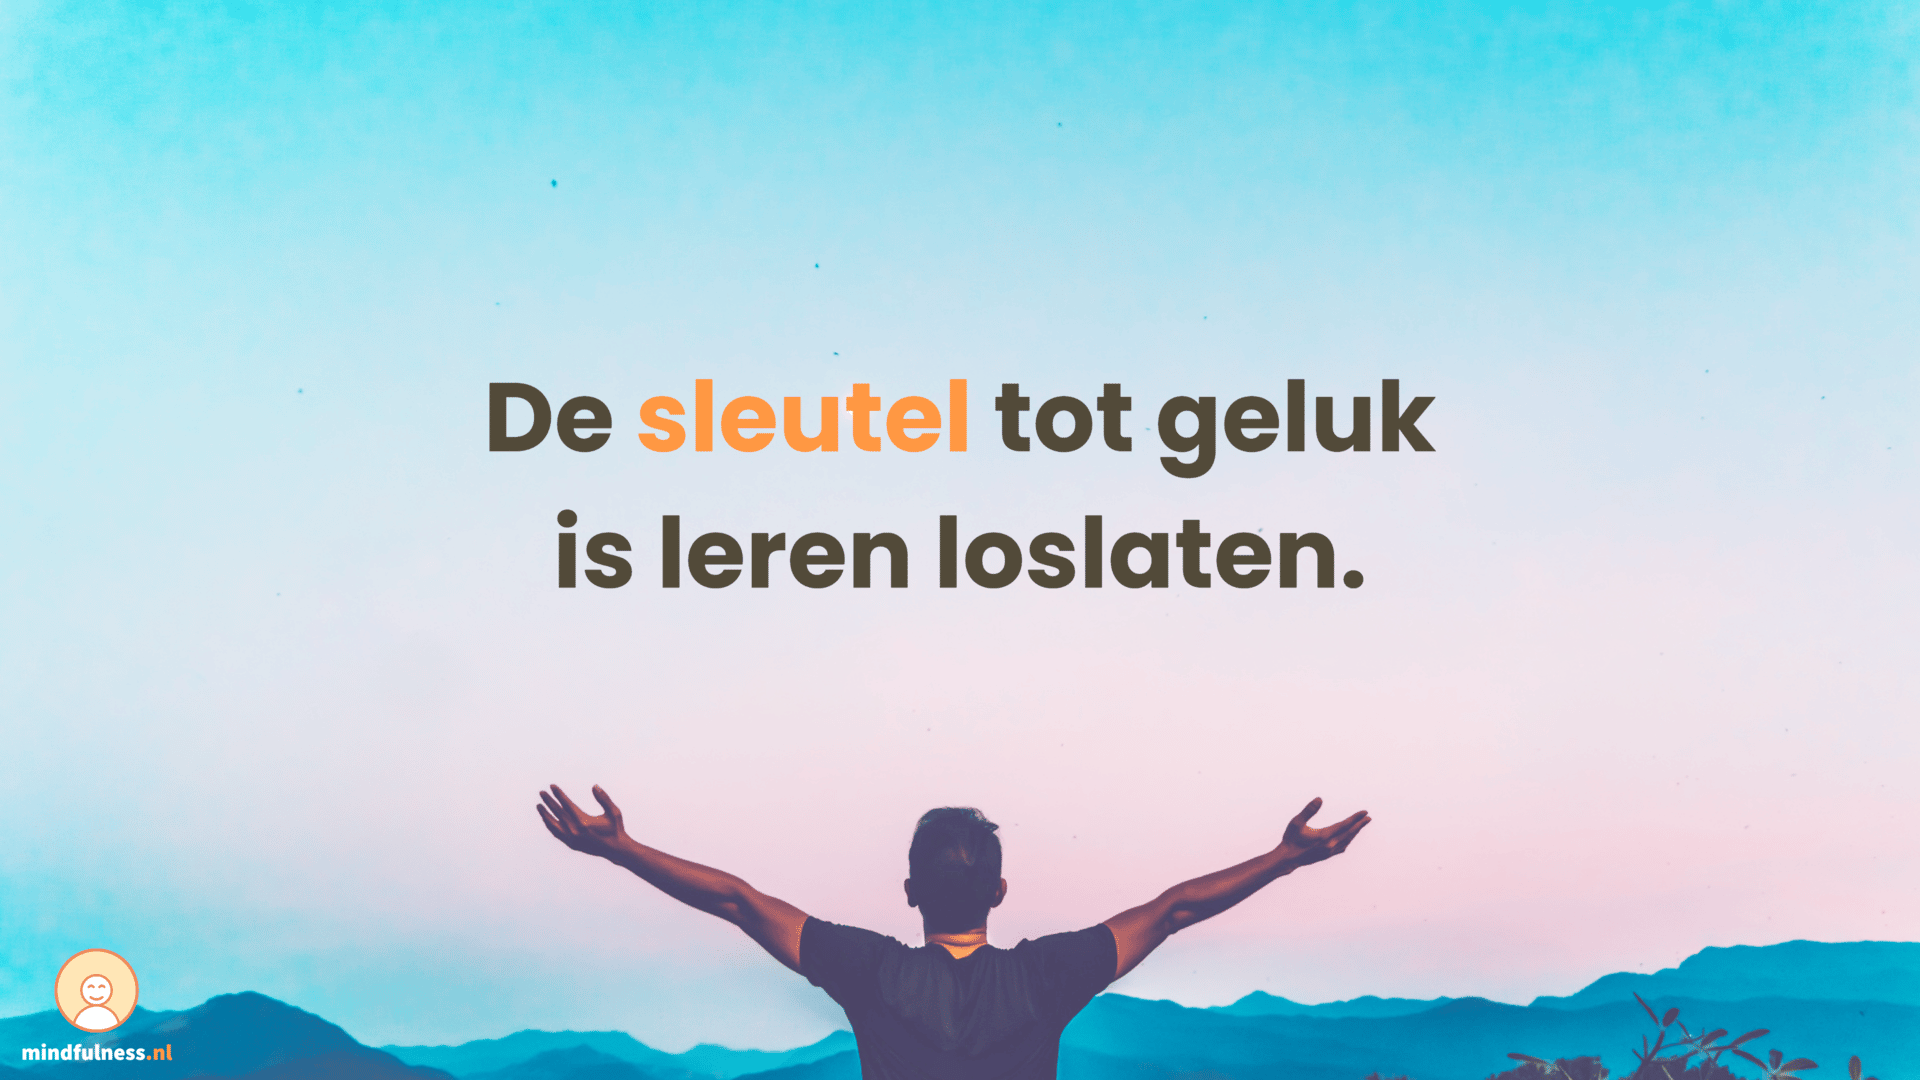 dans Botanist Integraal Leren loslaten in 5 stappen - Mindfulness.nl